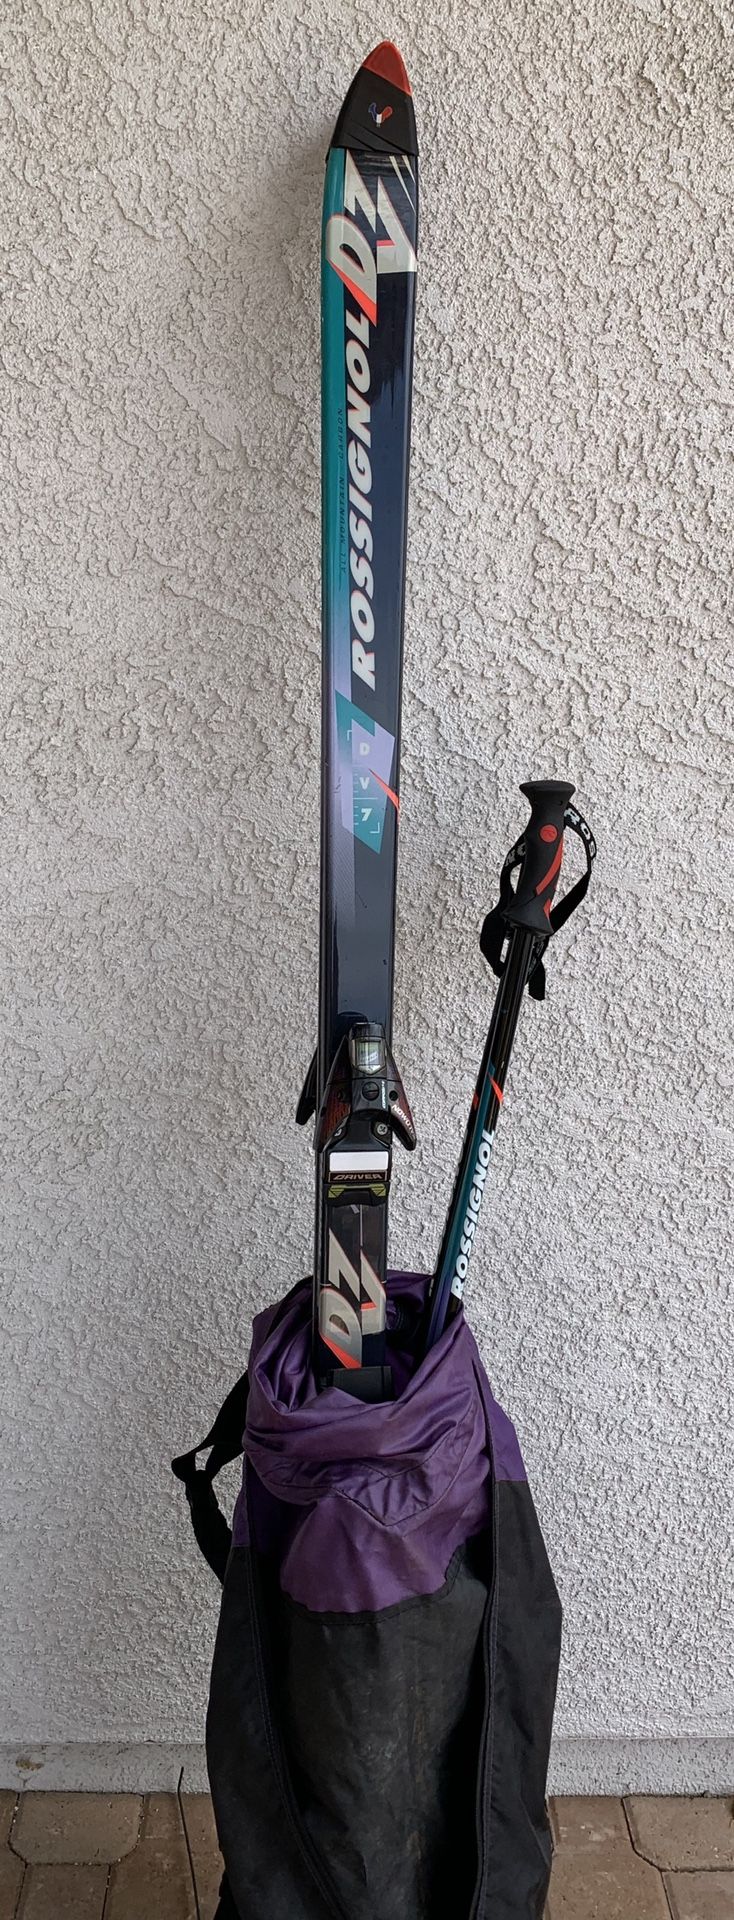 Used Rossignol ski's FREE